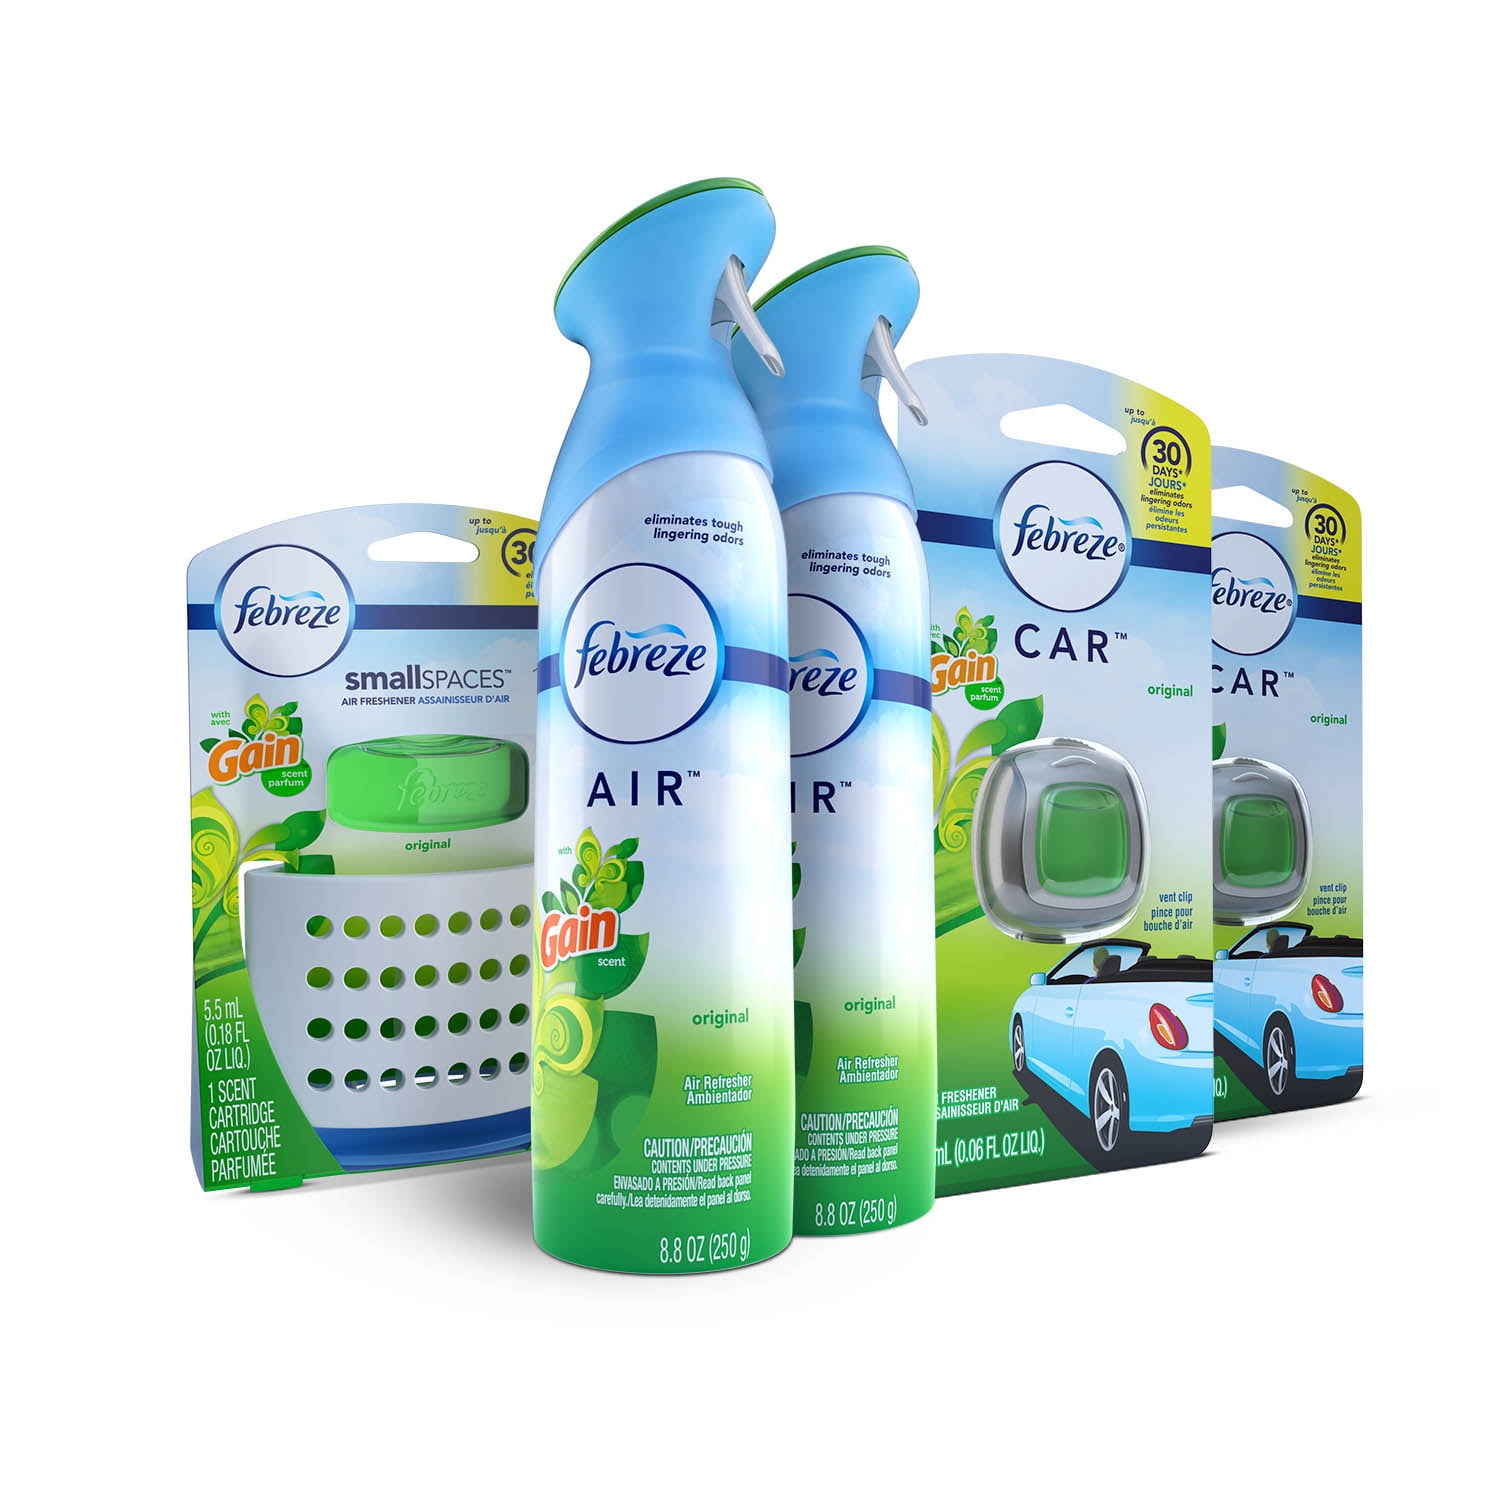 Febreze Car Air Freshener, 4 Pack with Gain Original and Island Fresh Scents